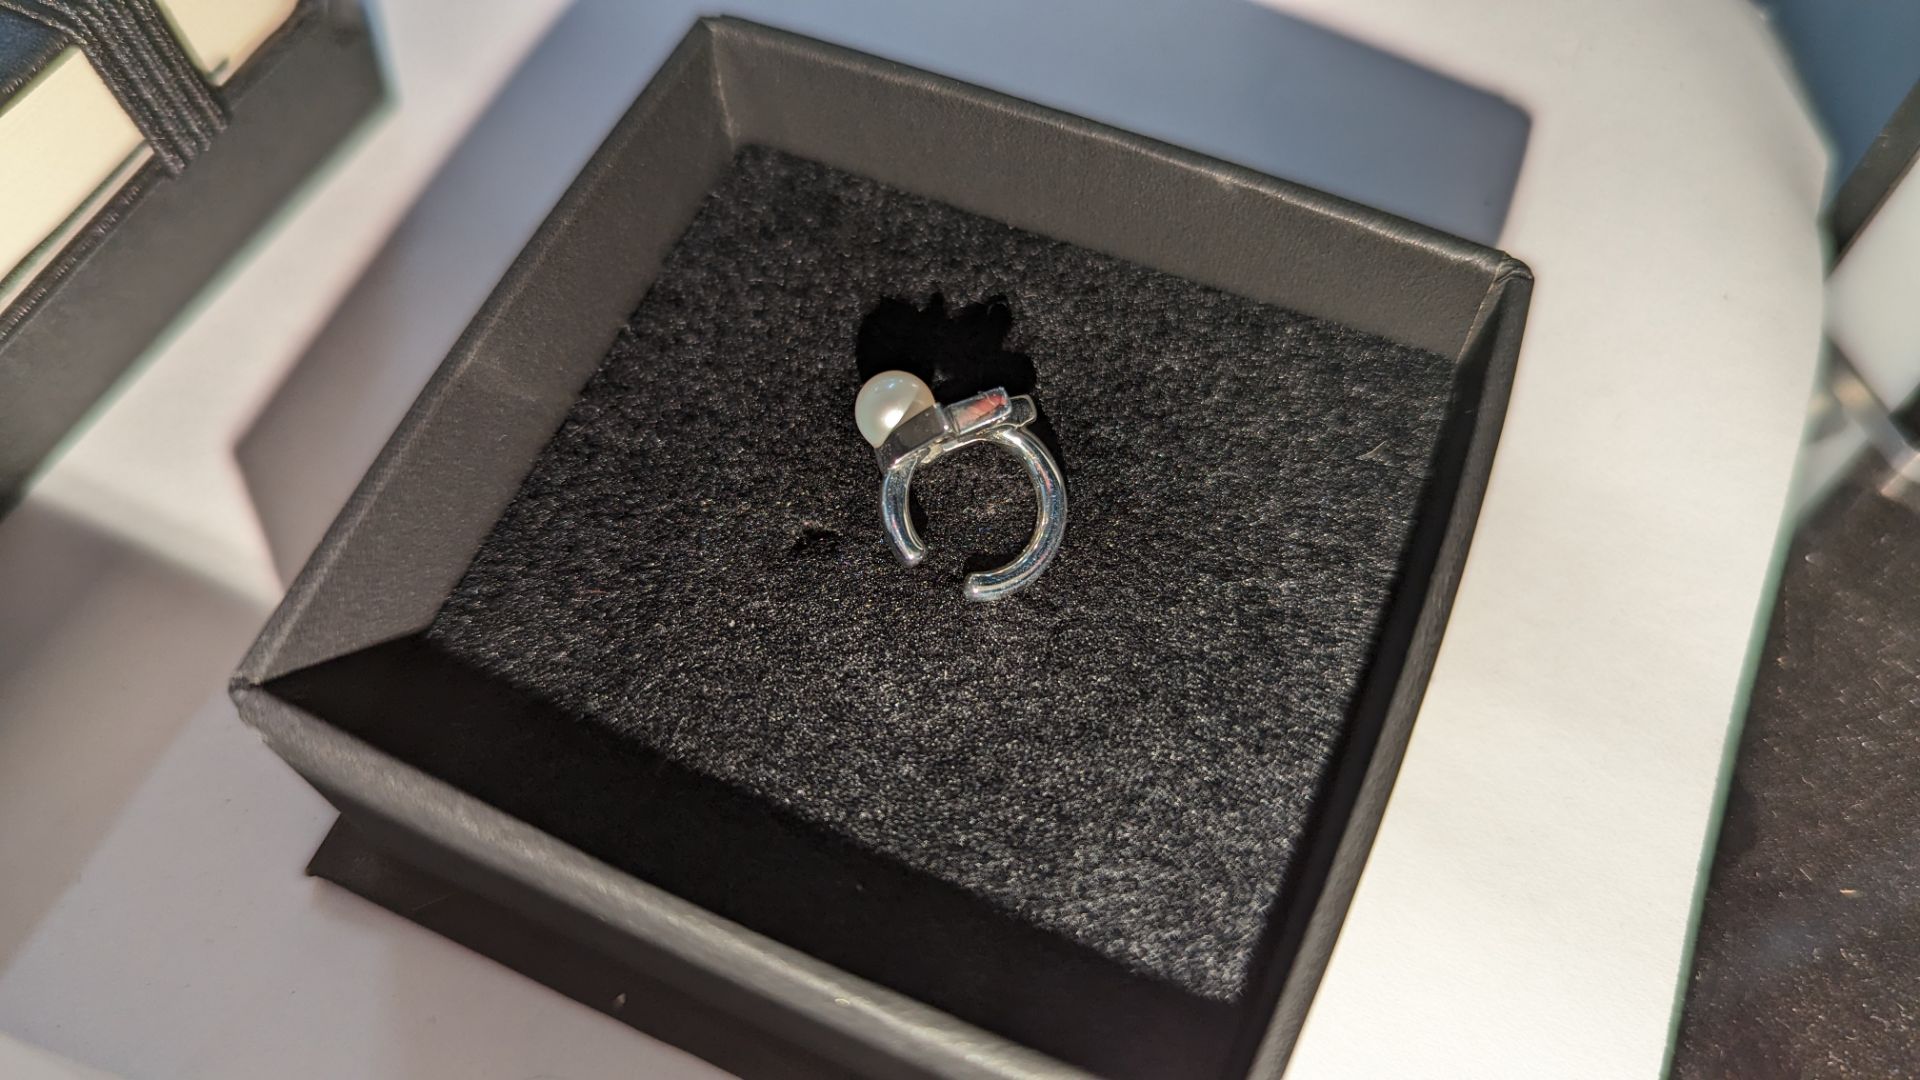 Tasaki small ring stamped 925, including presentation box, plus Tasaki moleskin notebook in its own - Image 4 of 11